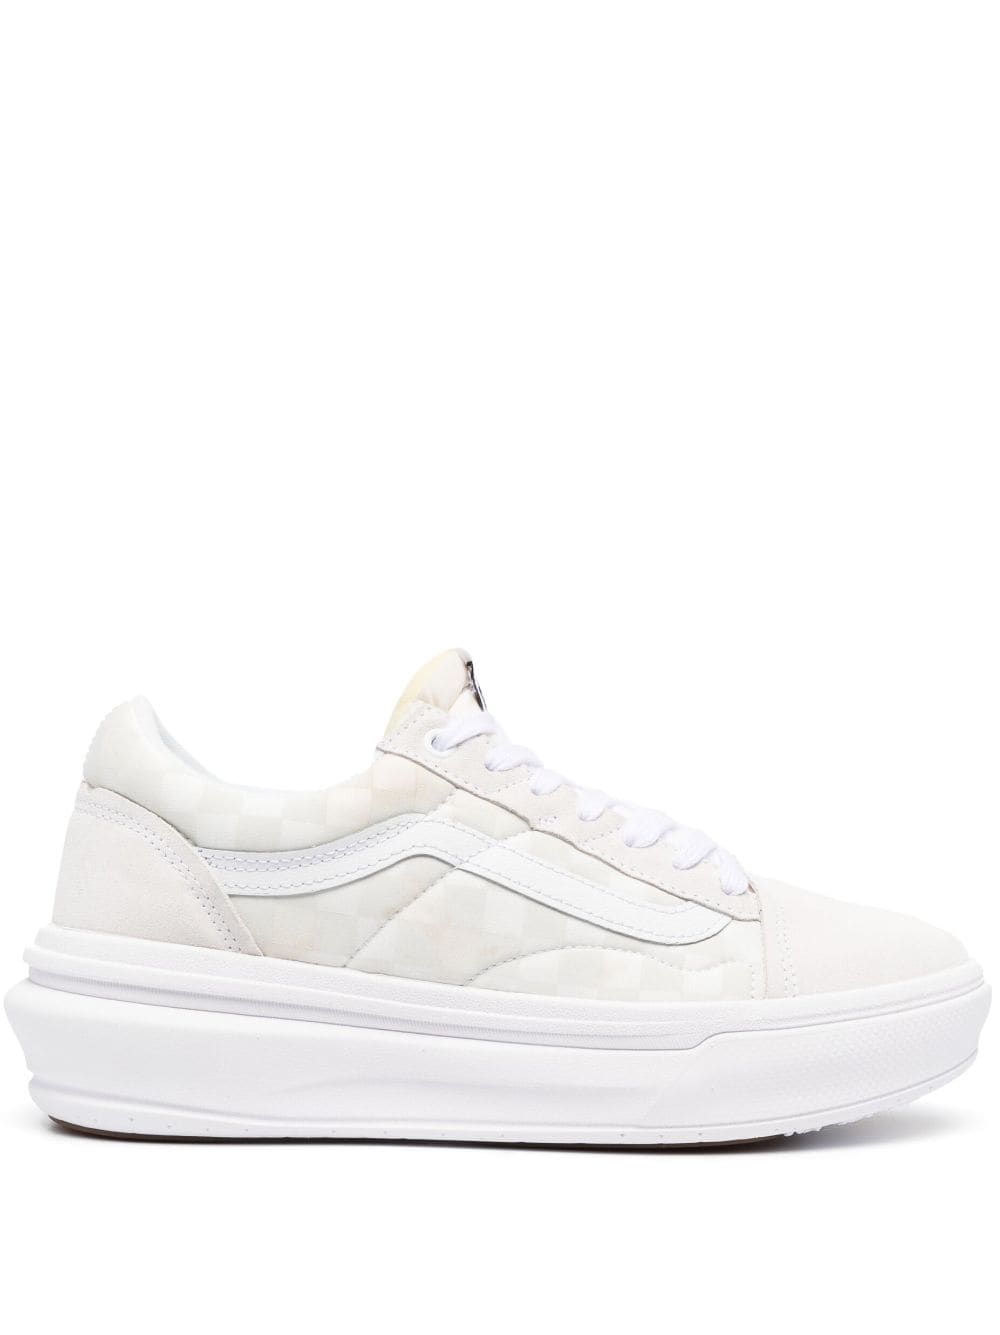 Vans flat rubber sole sneakers - White von Vans